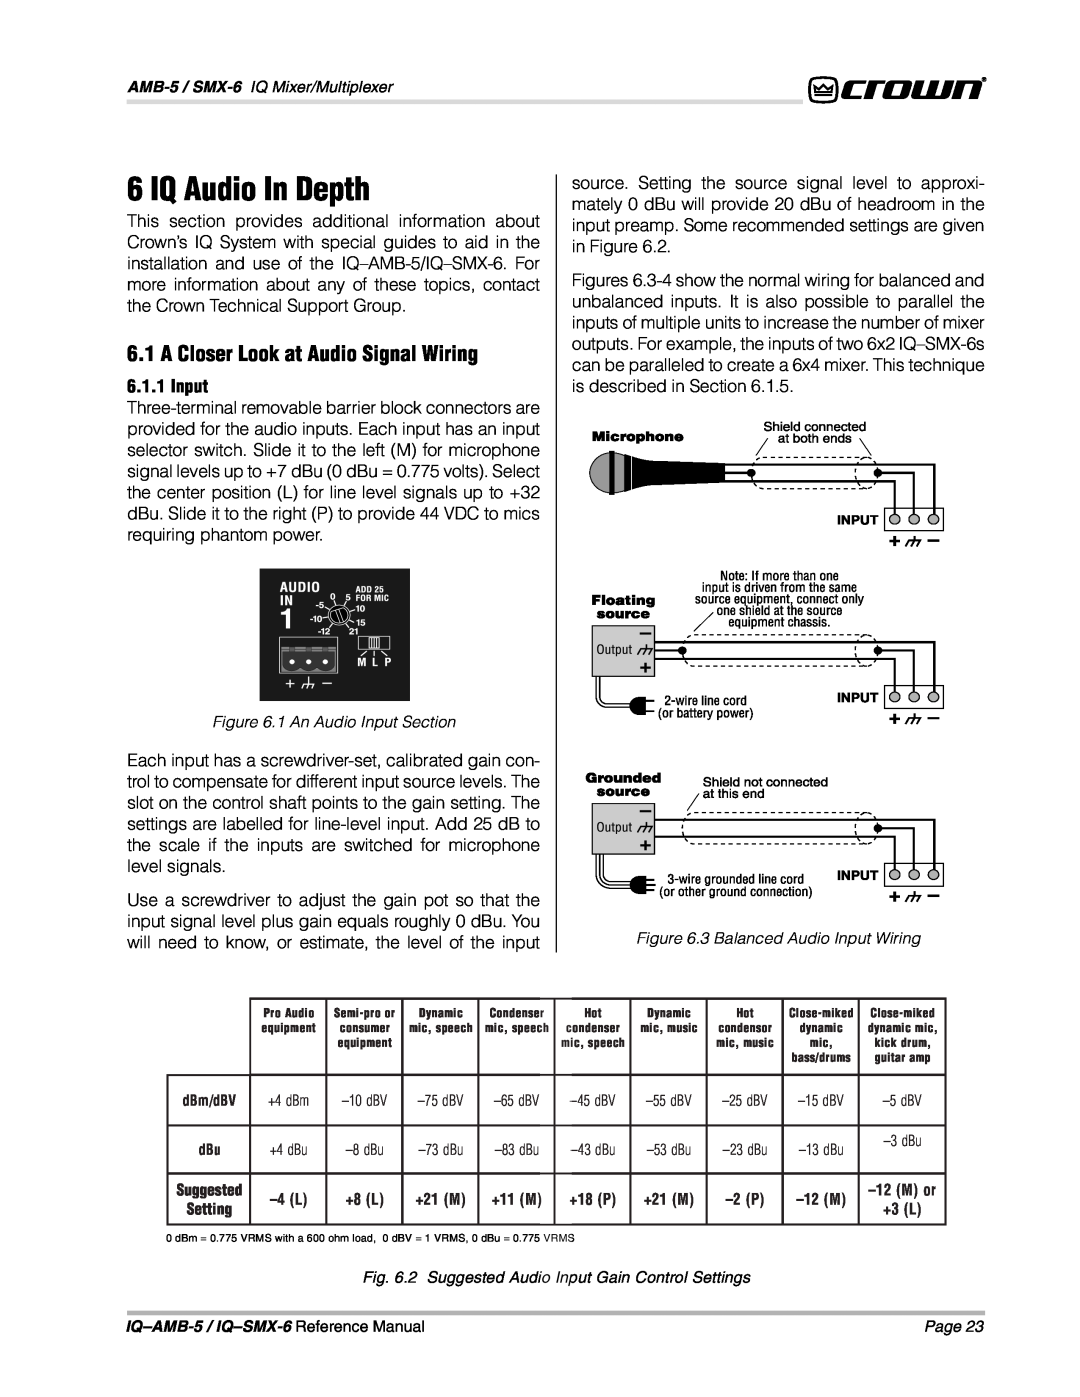 Crown IQAMB-5, IQSMX-6 manual IQ Audio In Depth, A Closer Look at Audio Signal Wiring, Input 